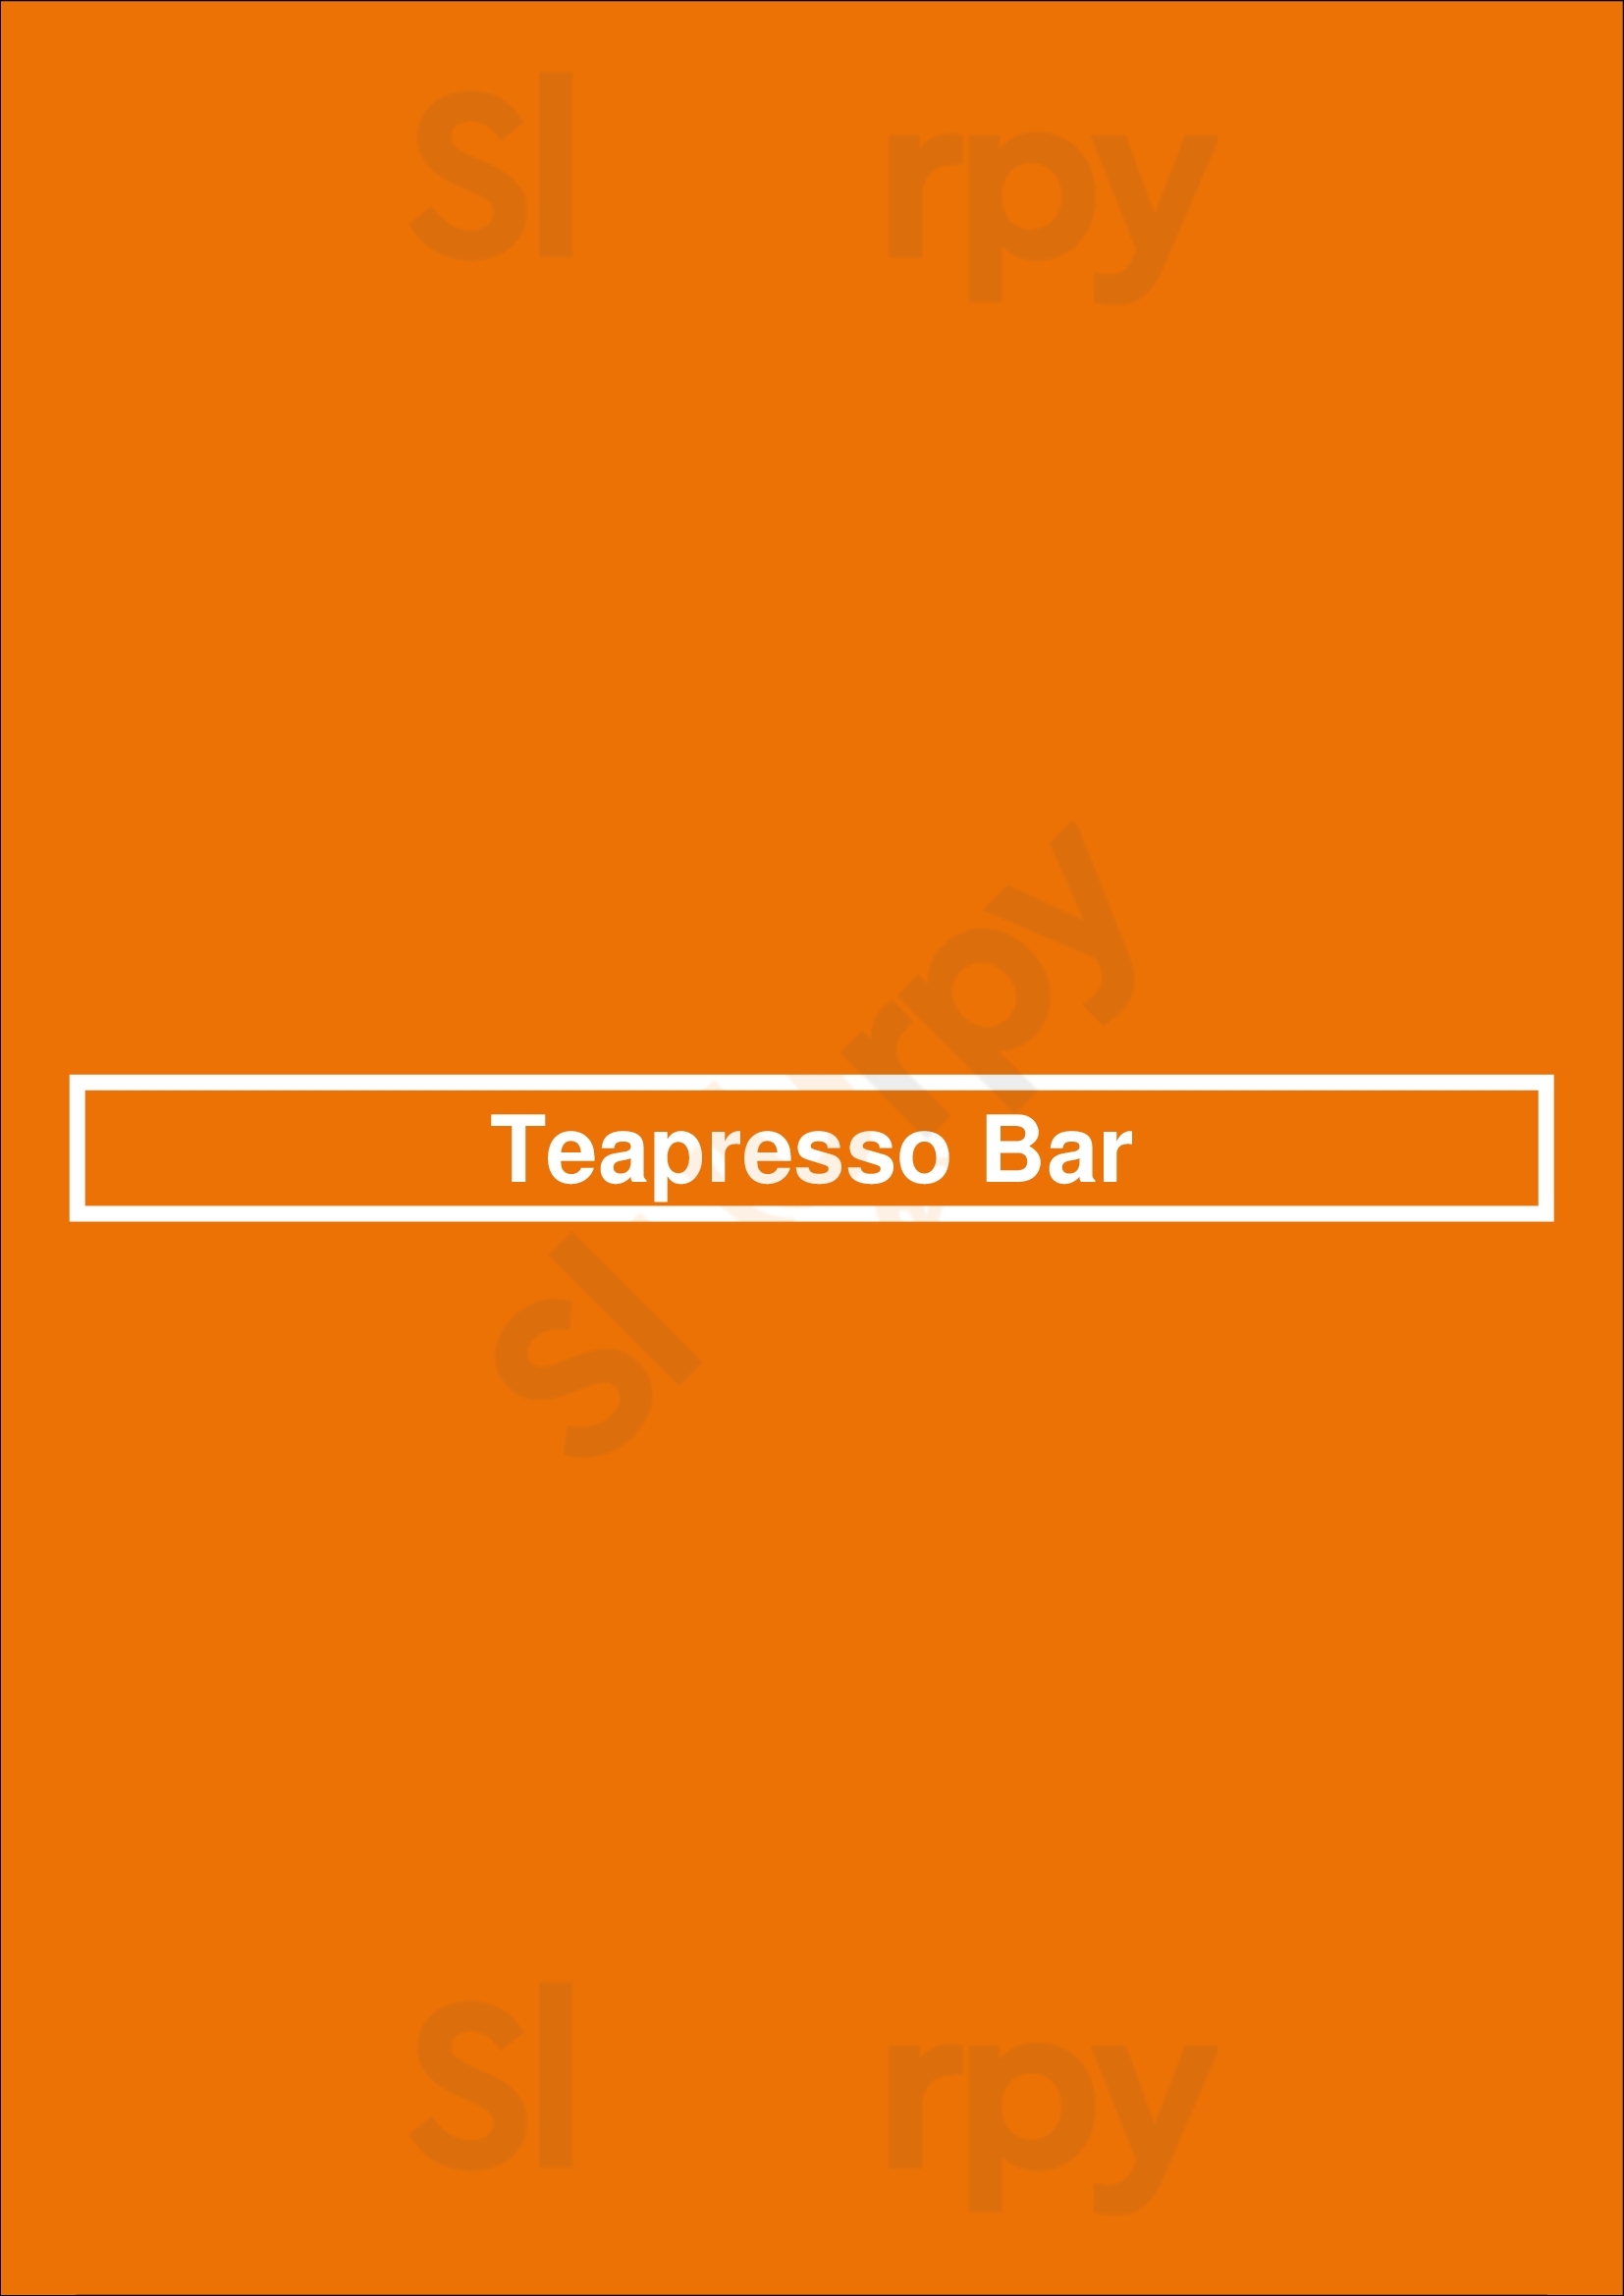 Teapresso Bar Honolulu Menu - 1